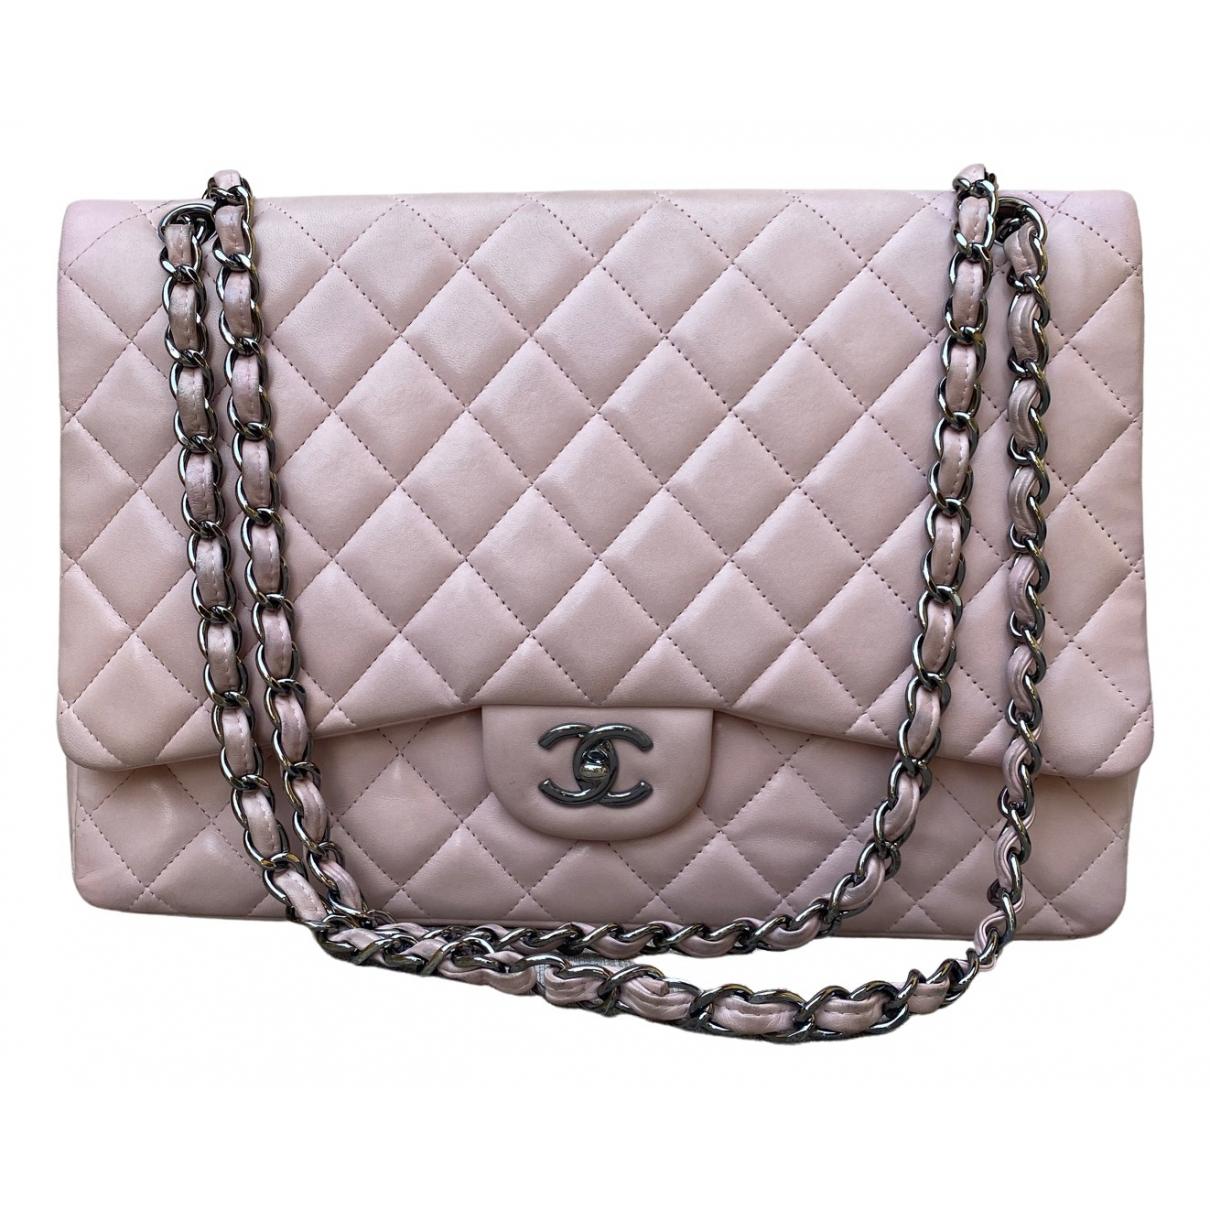 Timeless/classique tweed crossbody bag Chanel Pink in Tweed - 33339889